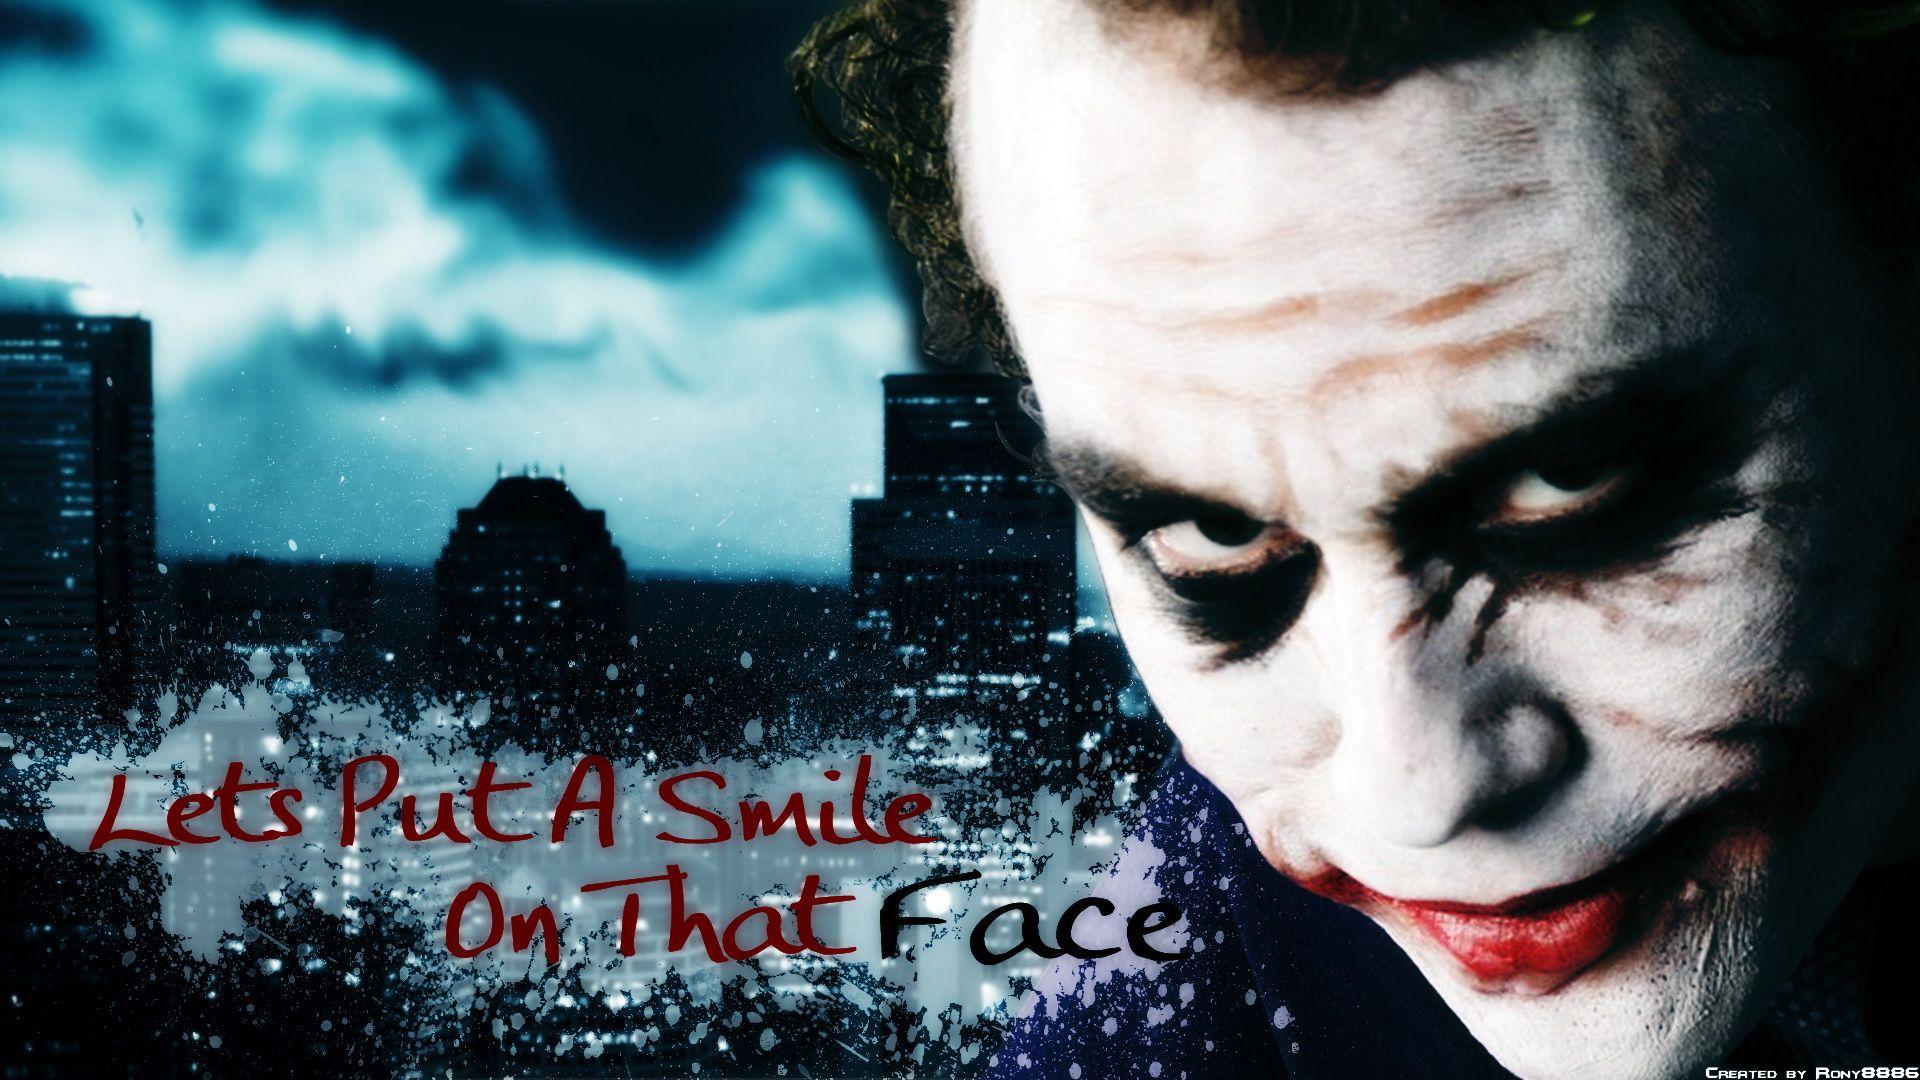 Heath Ledger Joker Quotes Wallpapers - Top Free Heath Ledger Joker